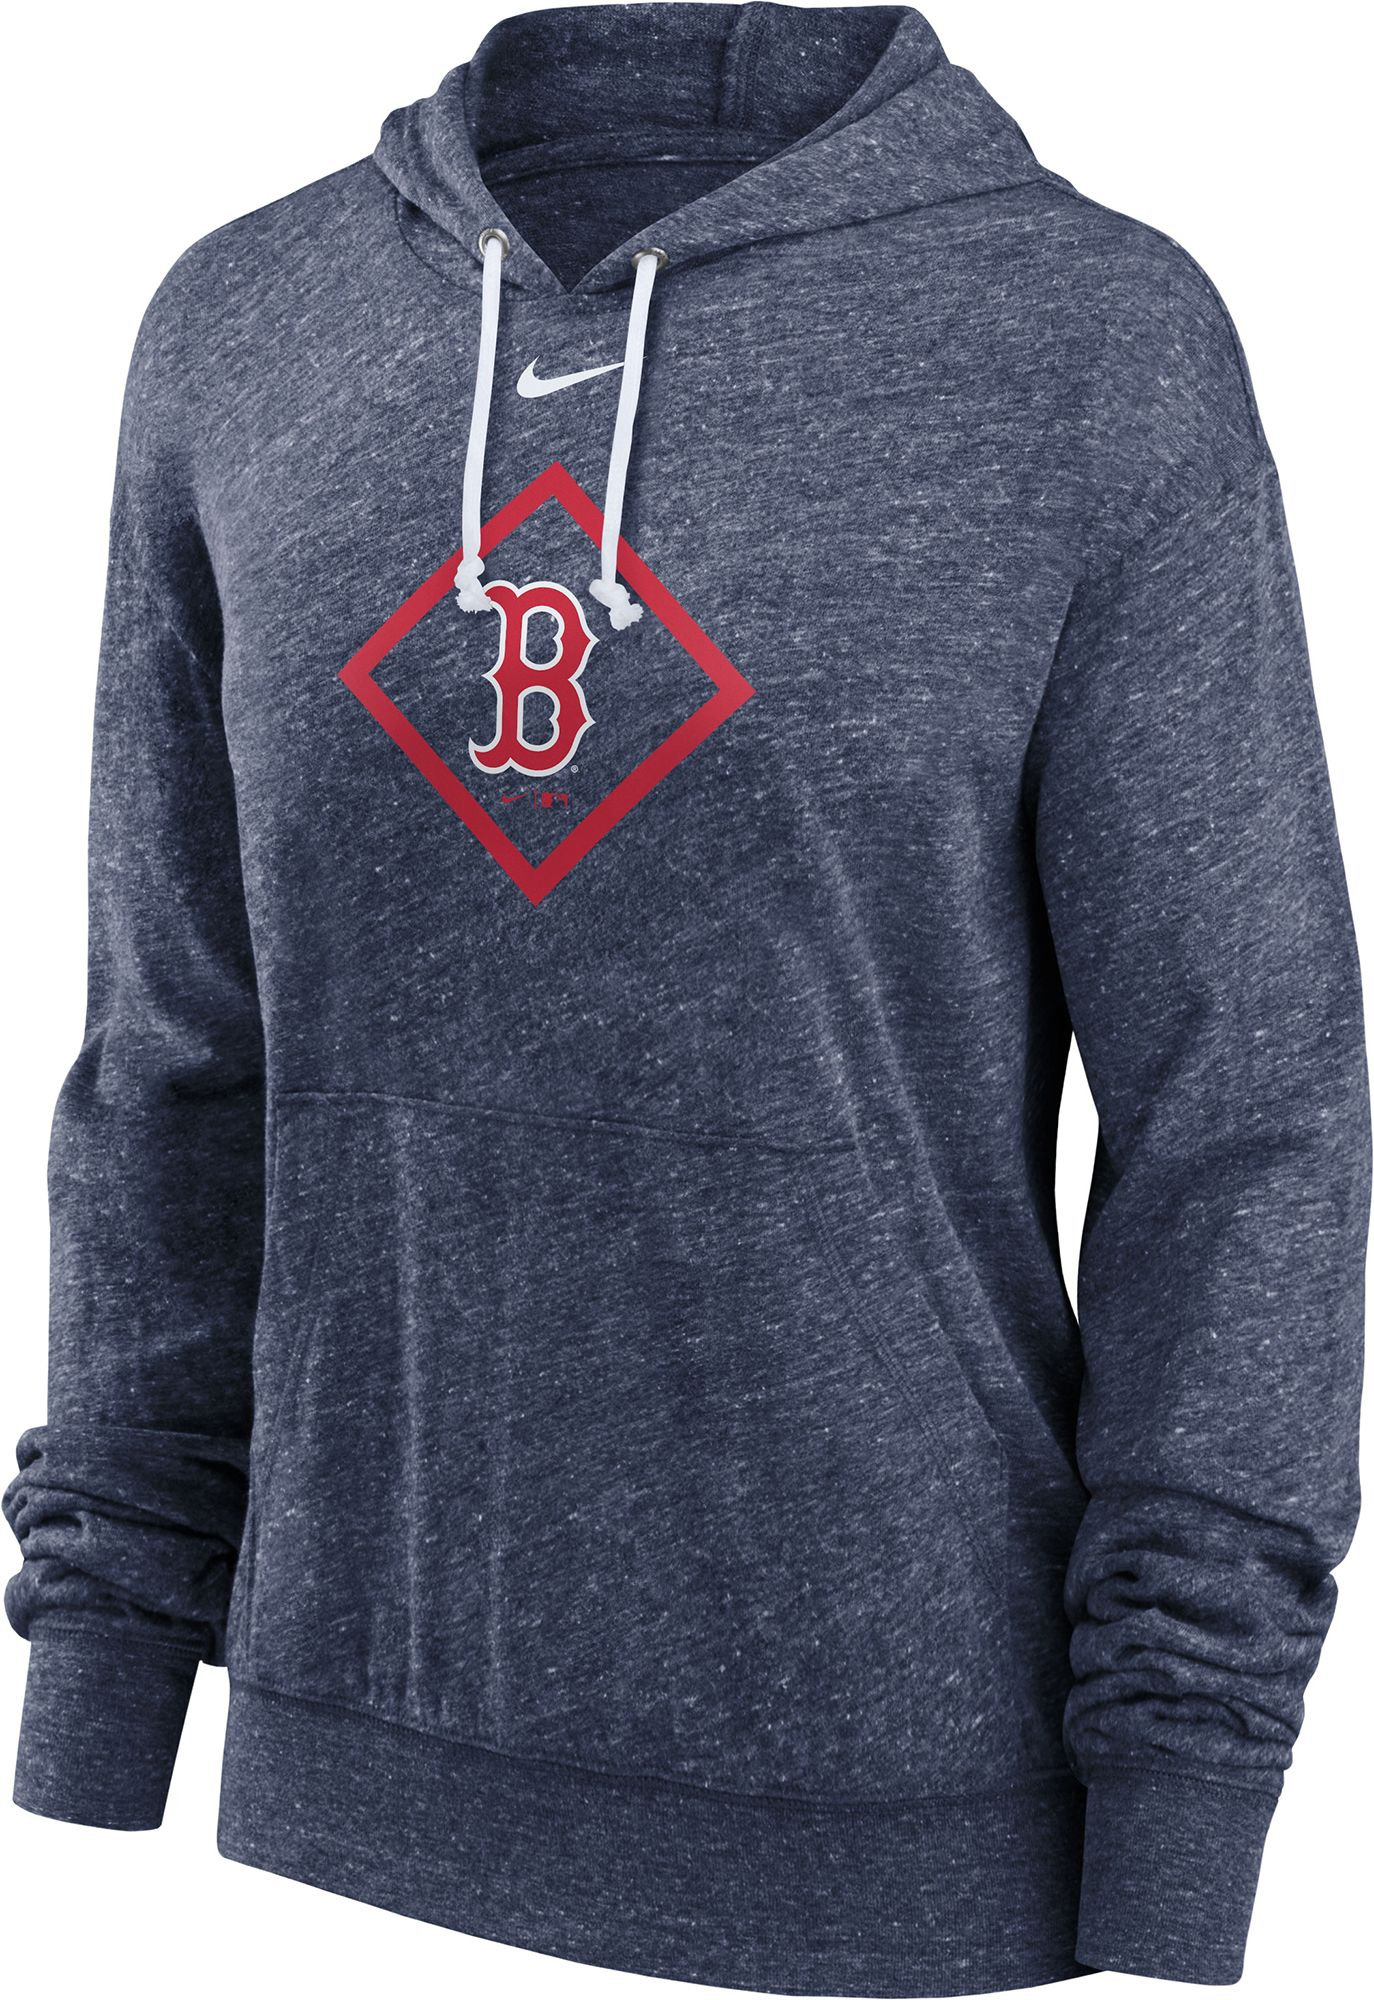 Nike Women's Boston Red Sox Navy Vintage Diamond Icon Hoodie, Small, Blue